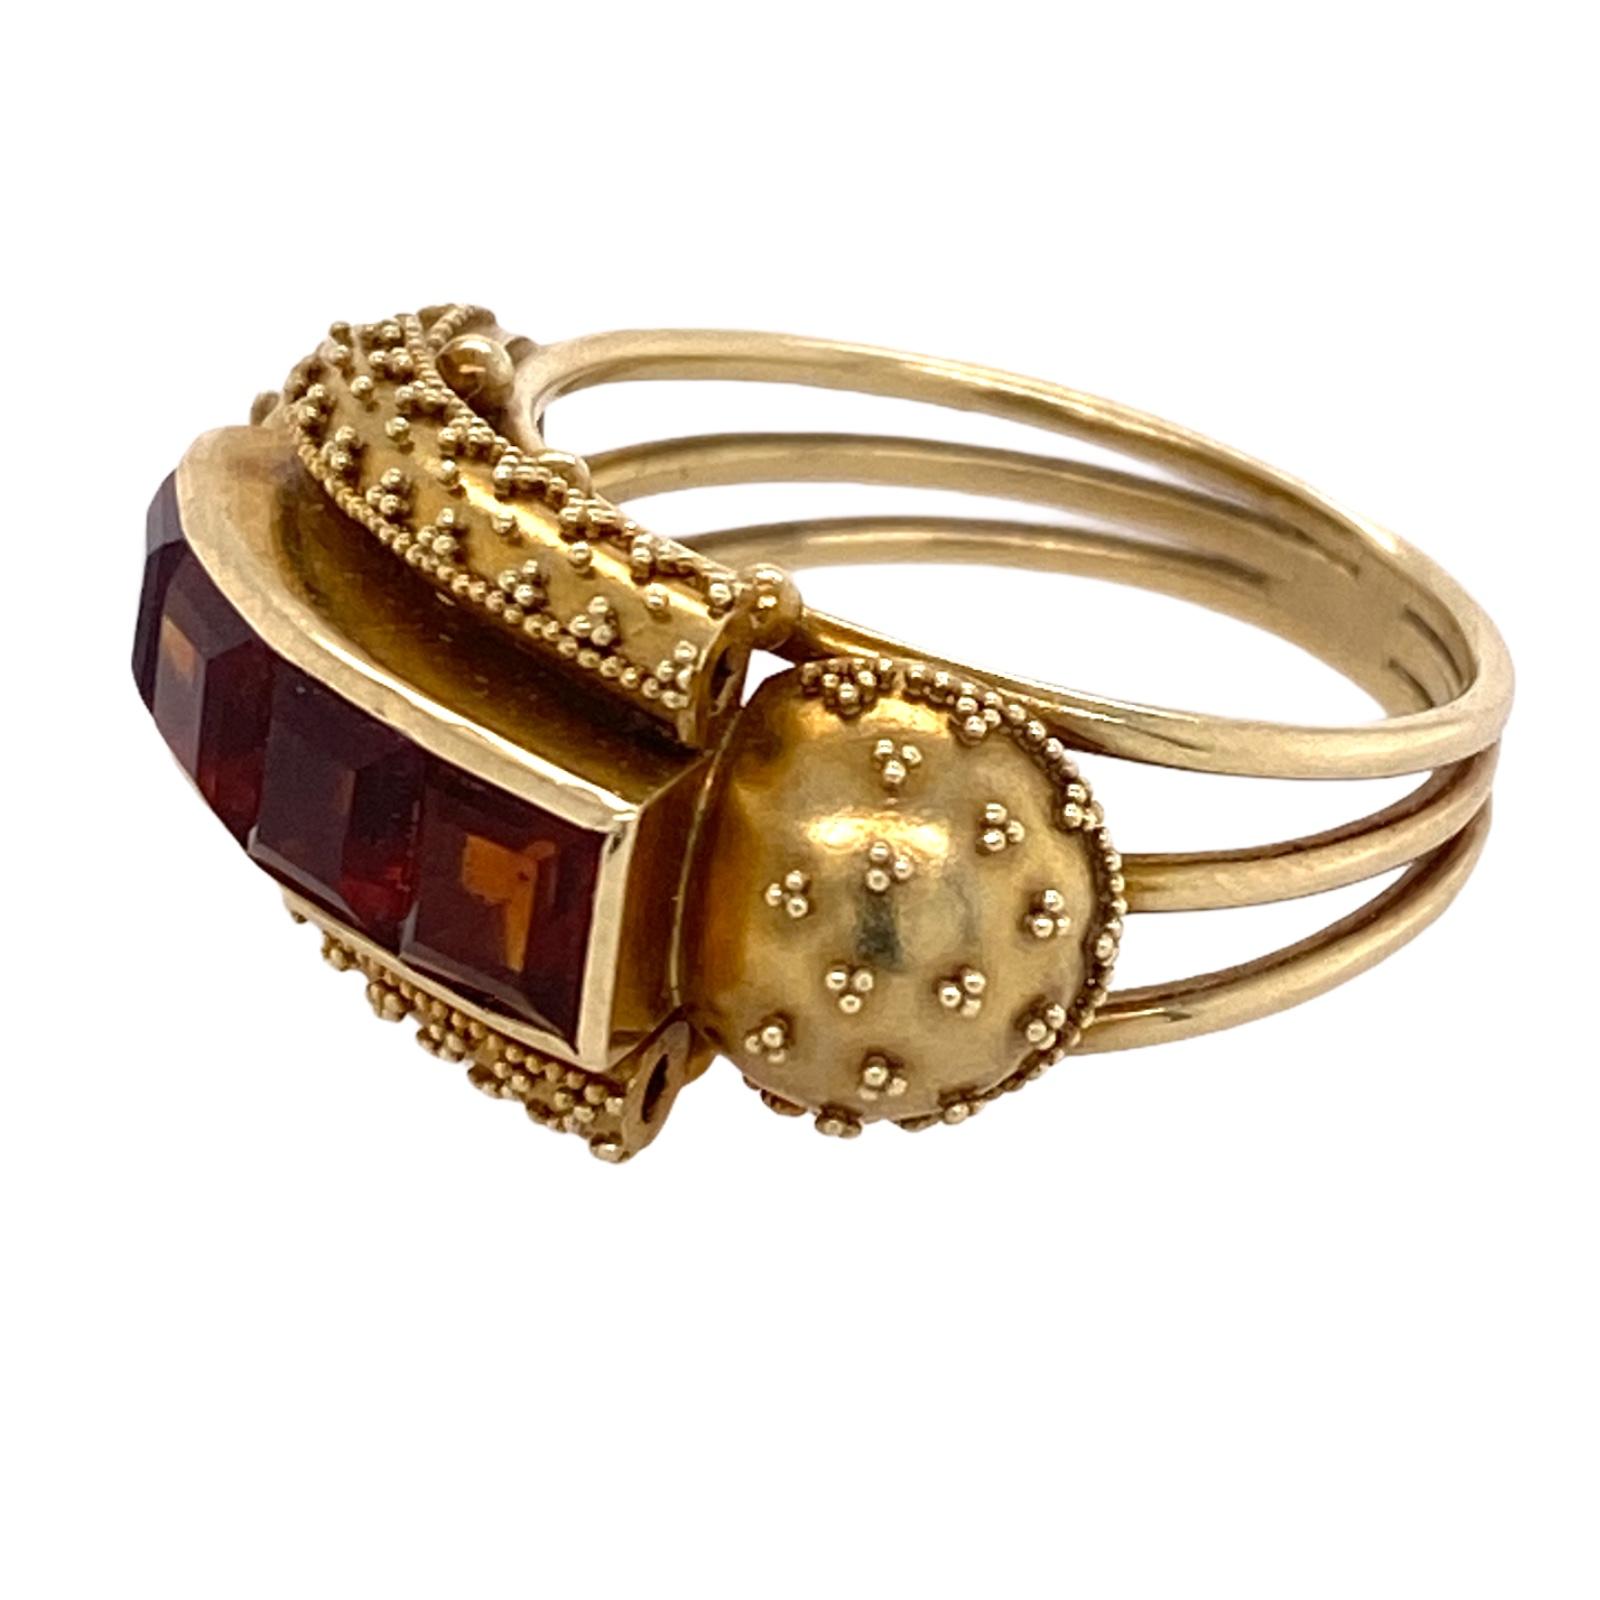 Square Cut Etruscan Style Honey Citrine Satin Finish Yellow Gold Vintage Ring Signed Birks